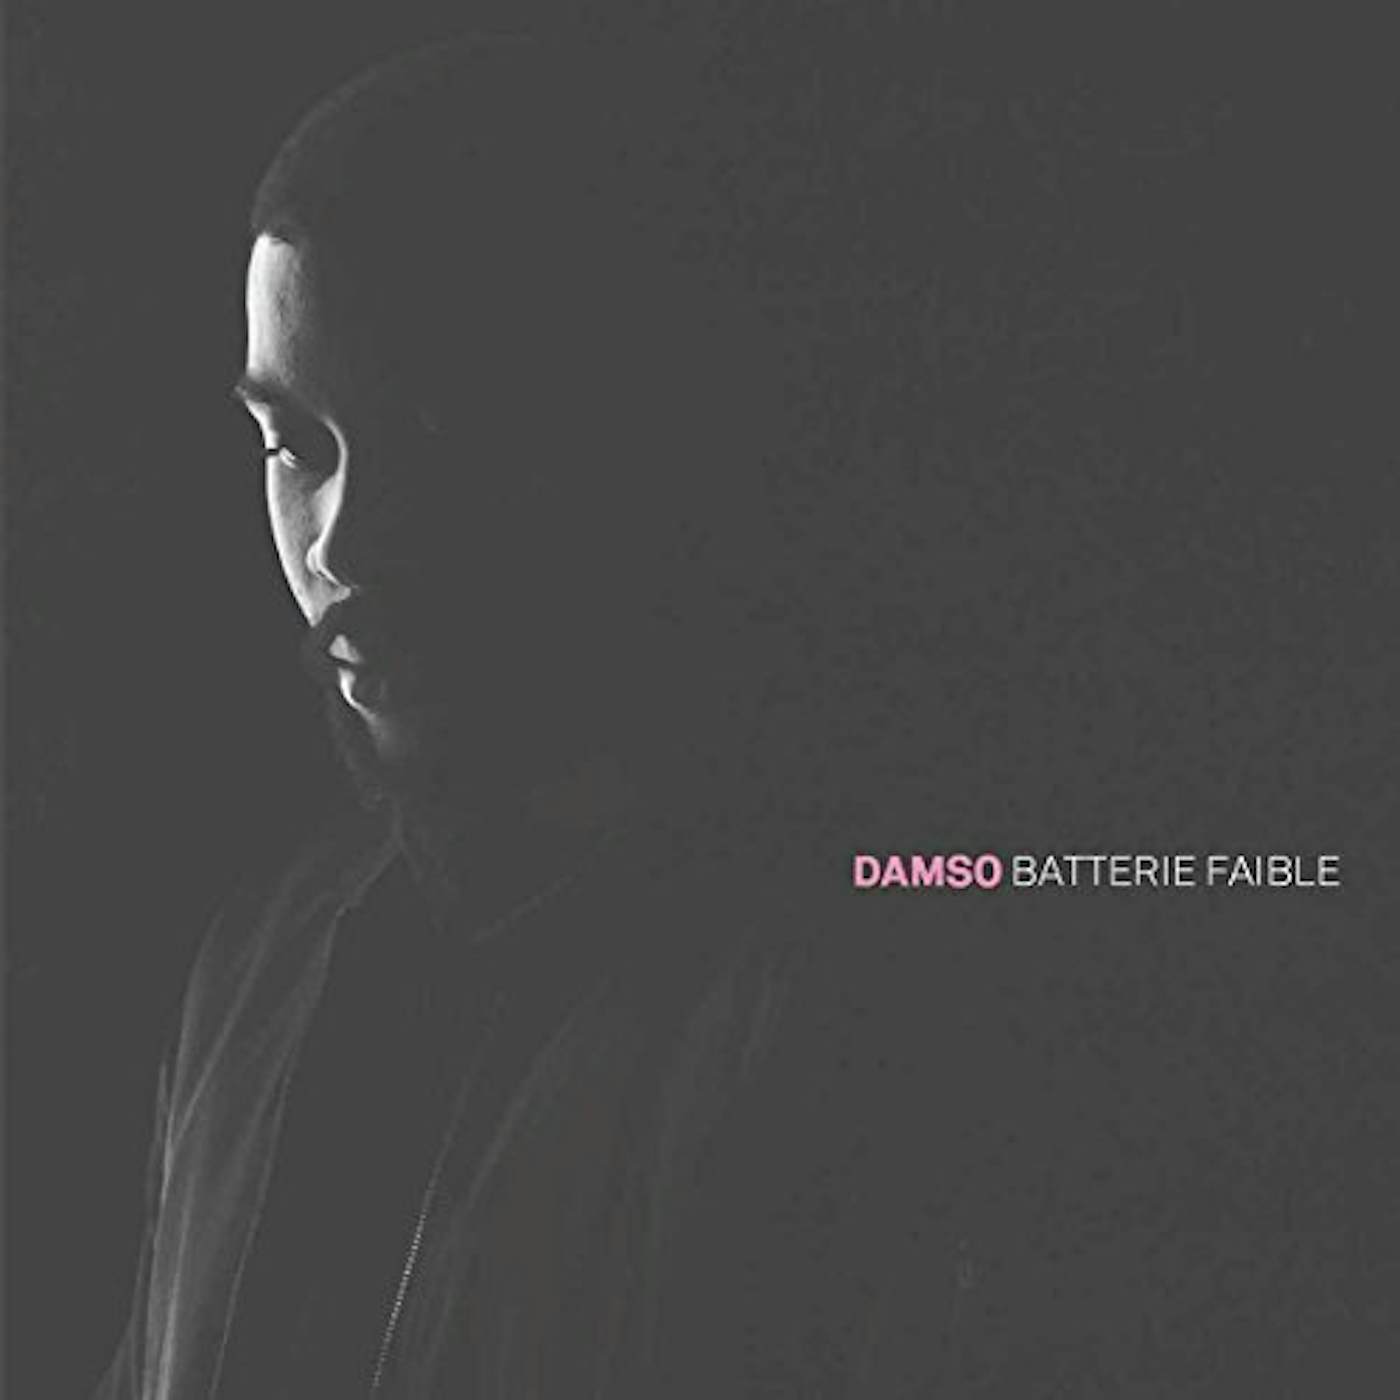 batterie faible cd - Damso